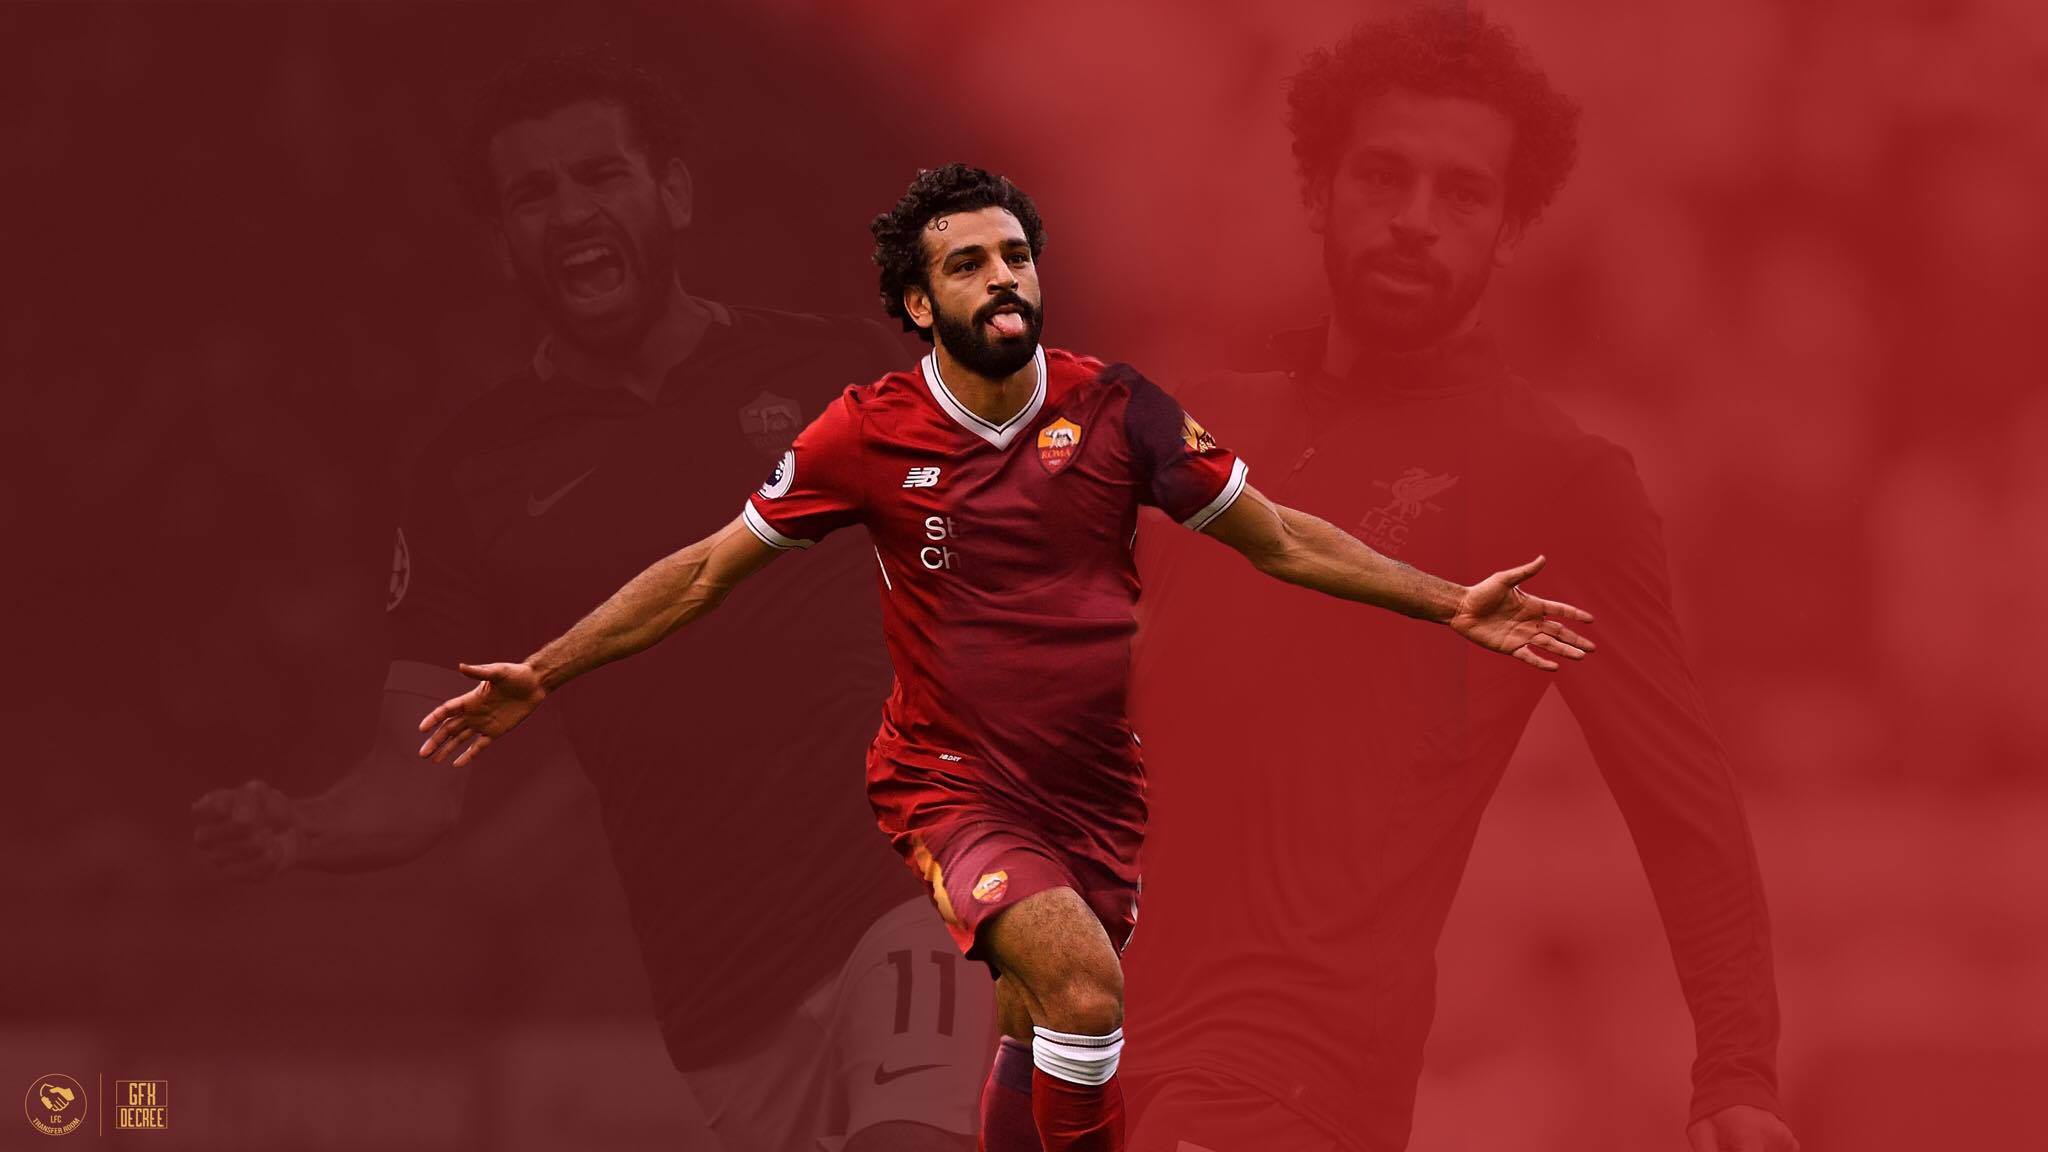 Mohamed Salah Wallpaper Downloadx1152. Image Id 9963